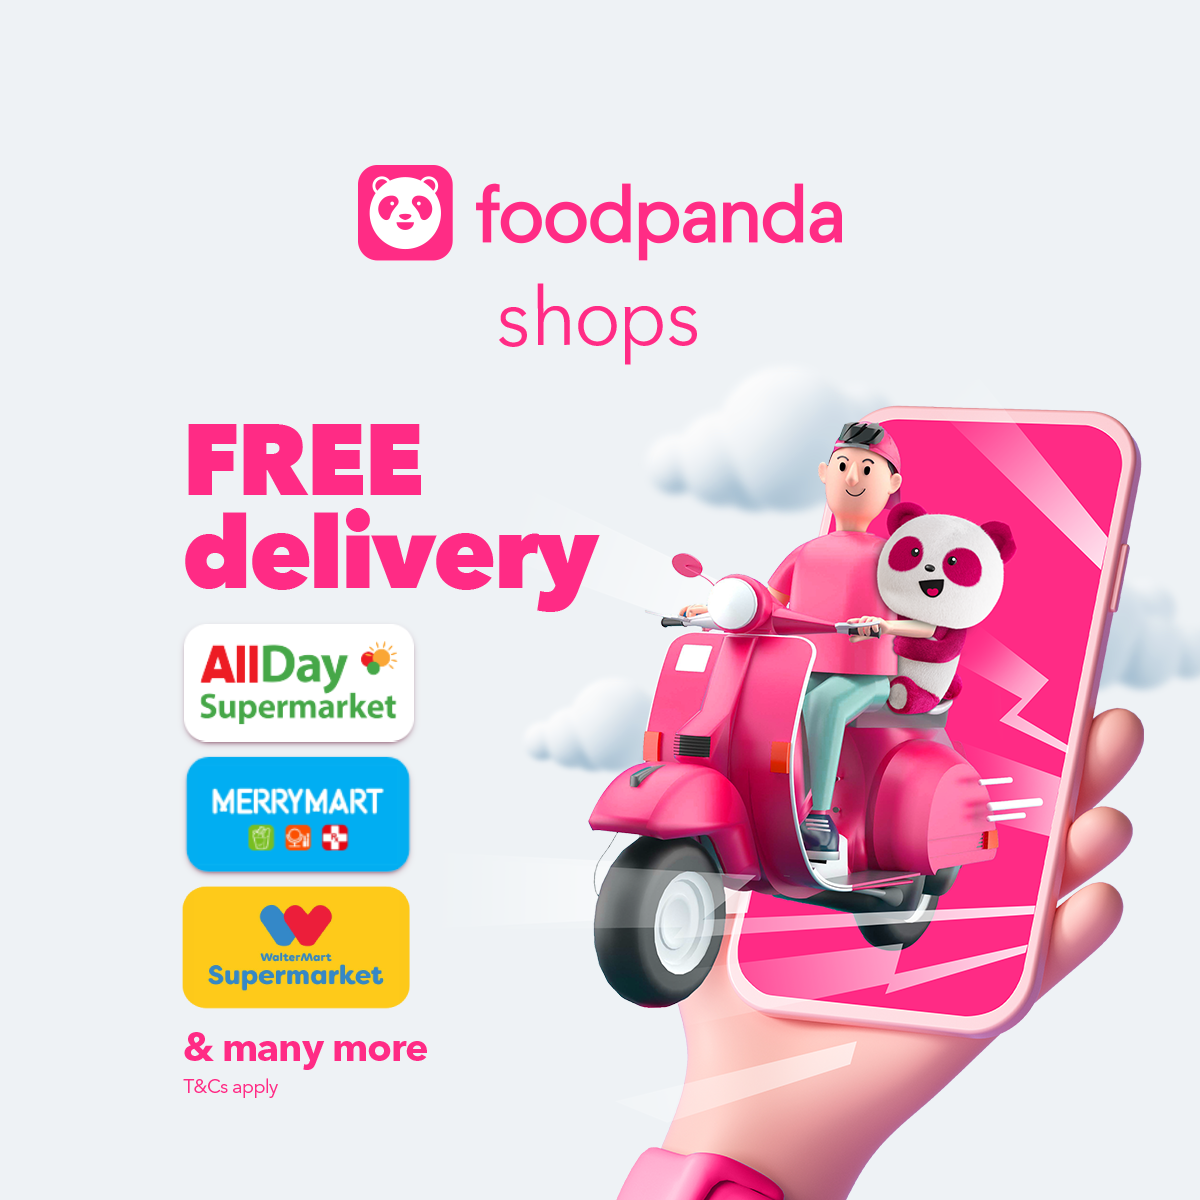 Food panda voucher 2022